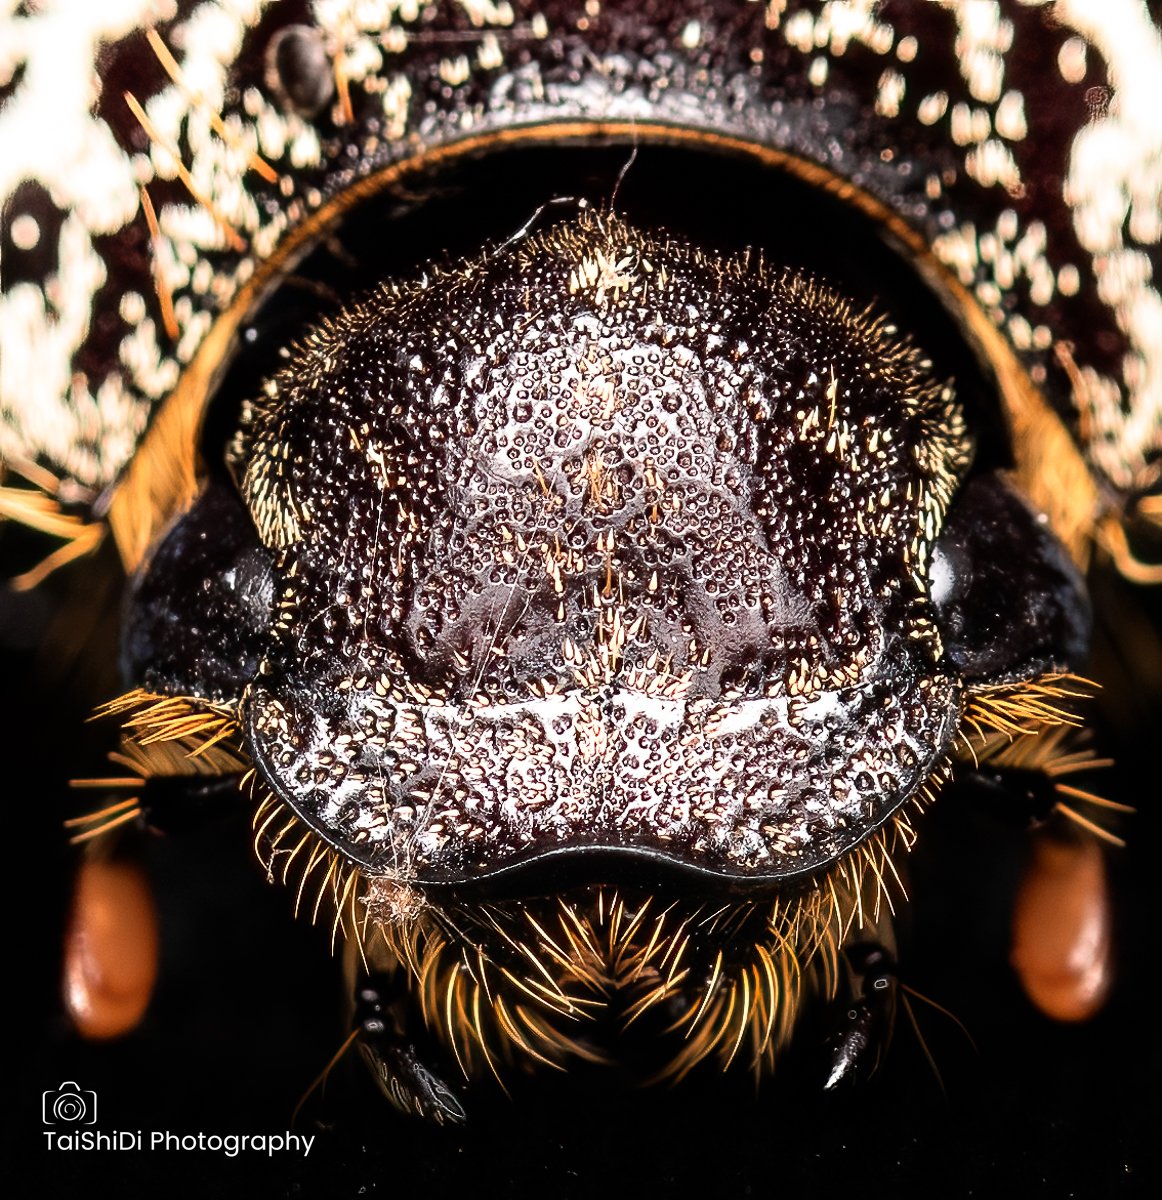 Cane Beetle (Head)